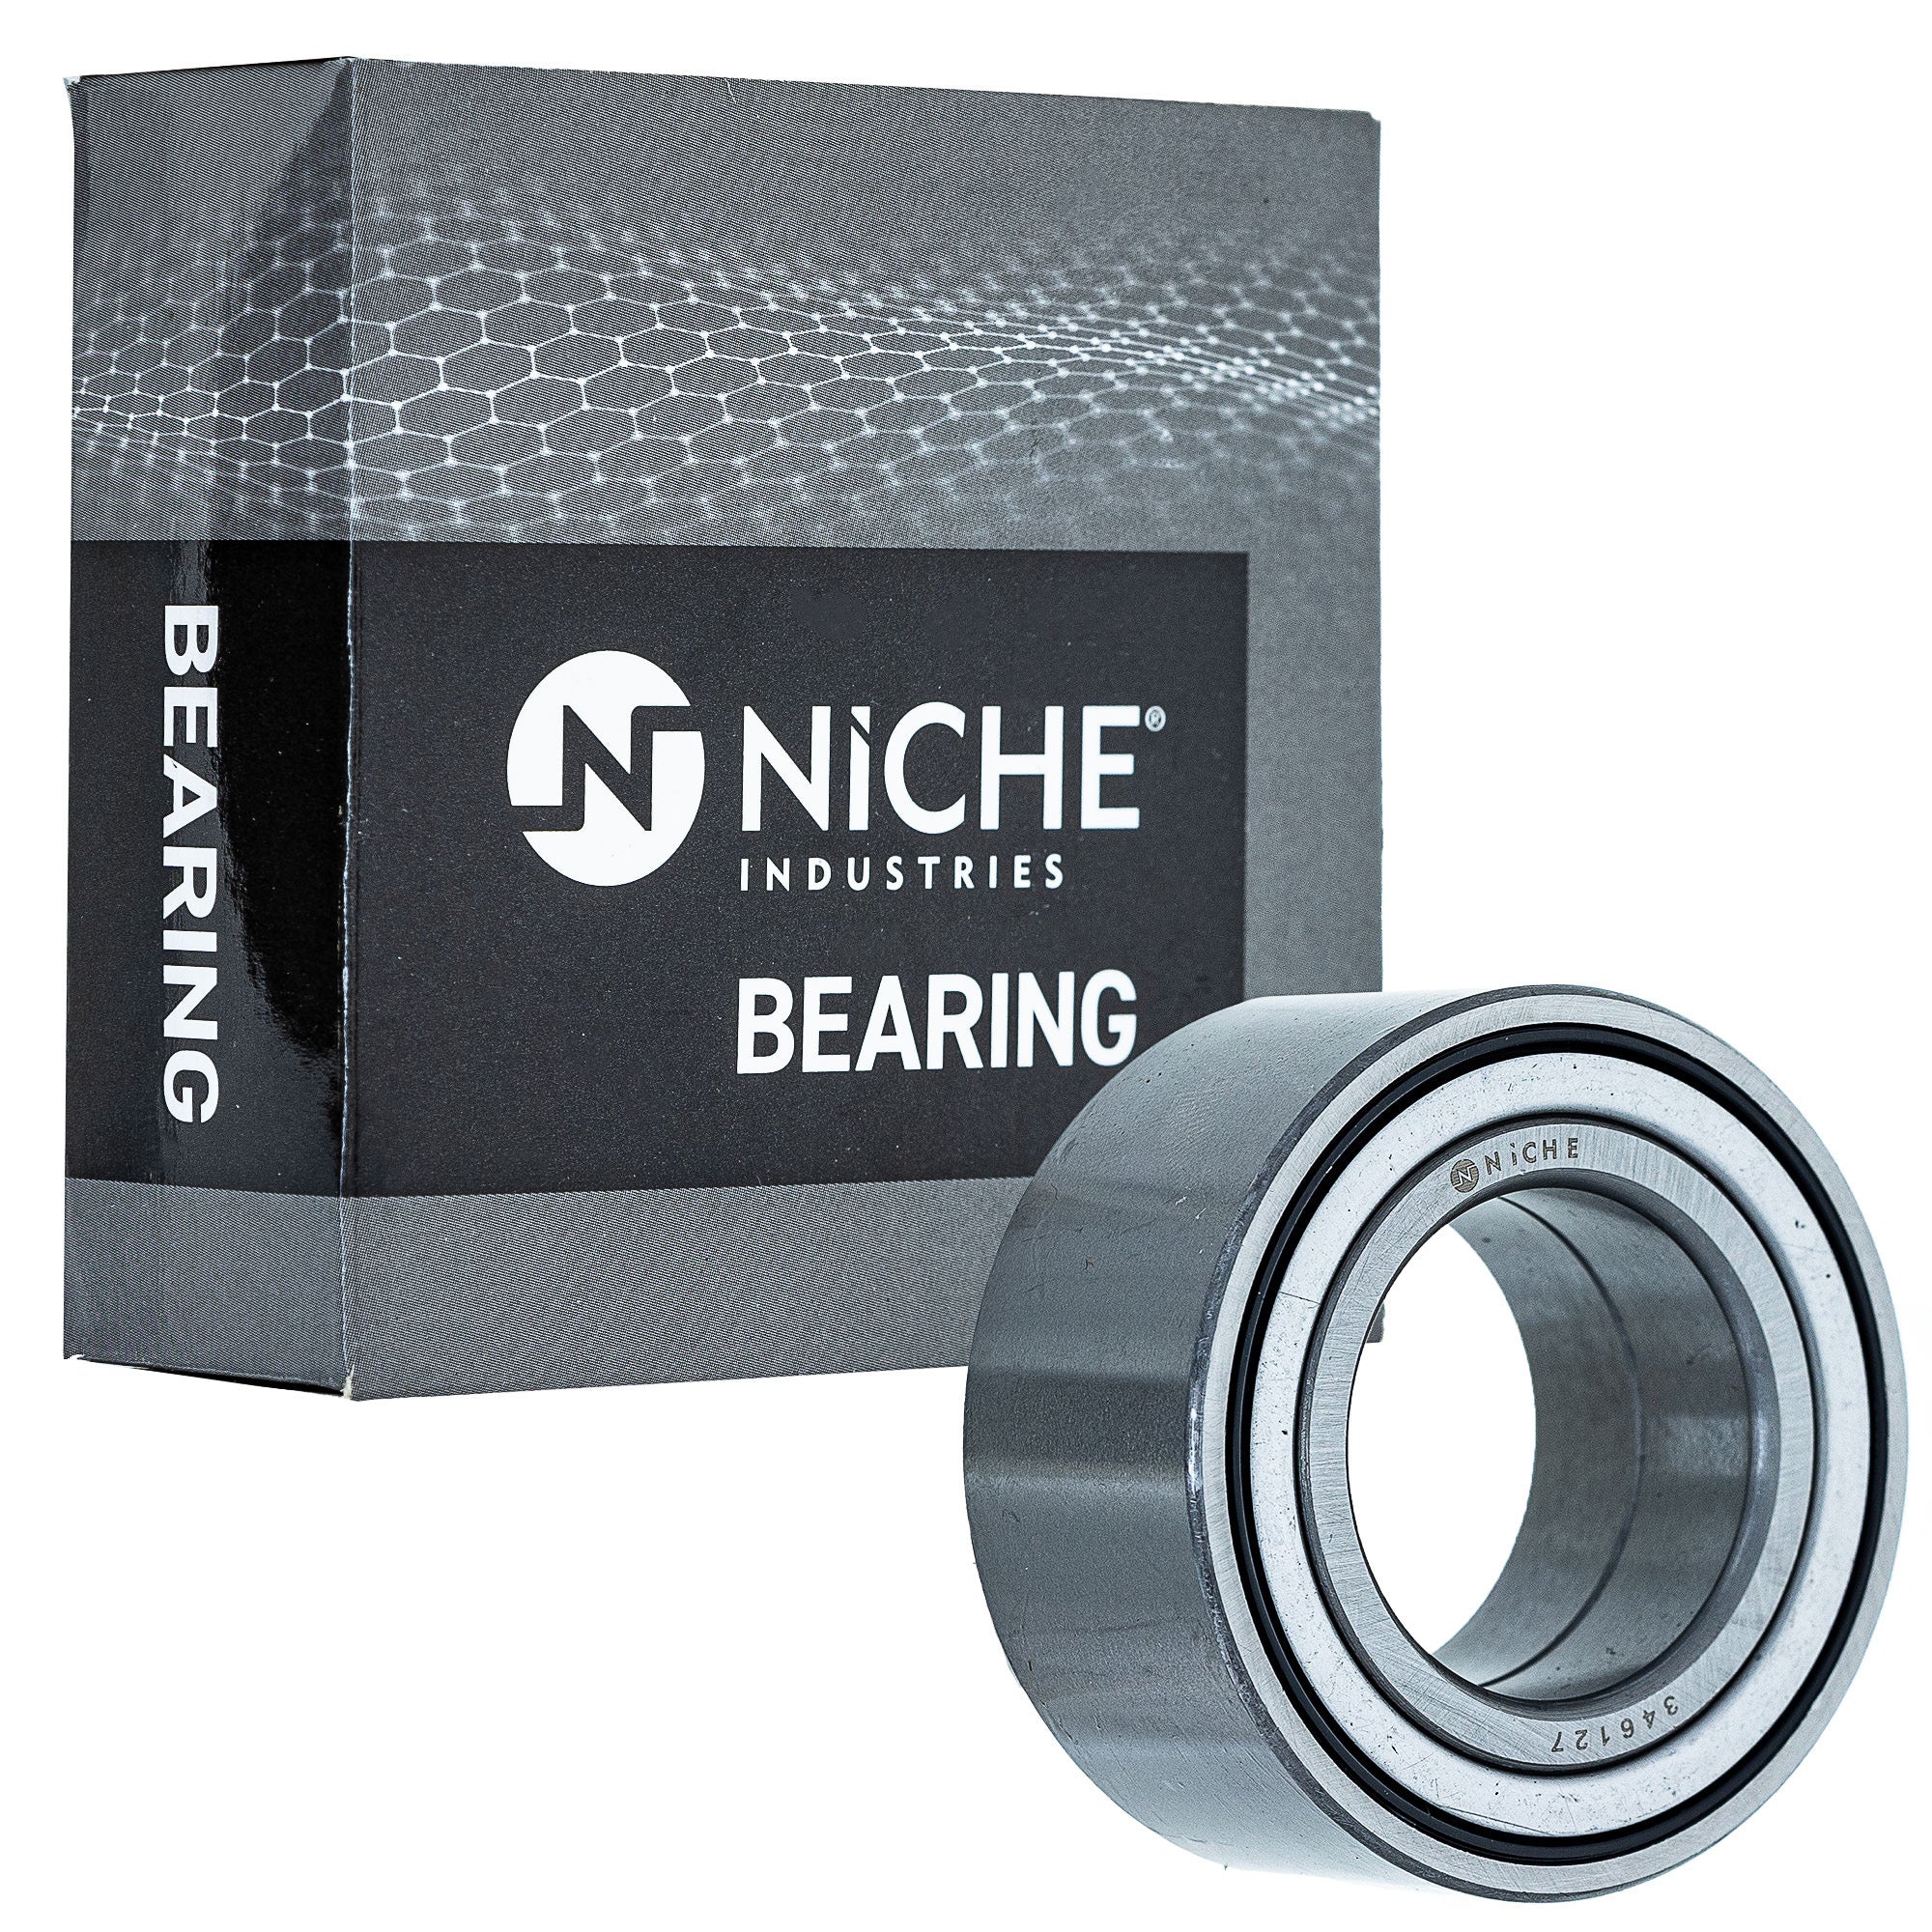 NICHE 519-CBB2293R Bearing 10-Pack for zOTHER TRX700XX Rancher